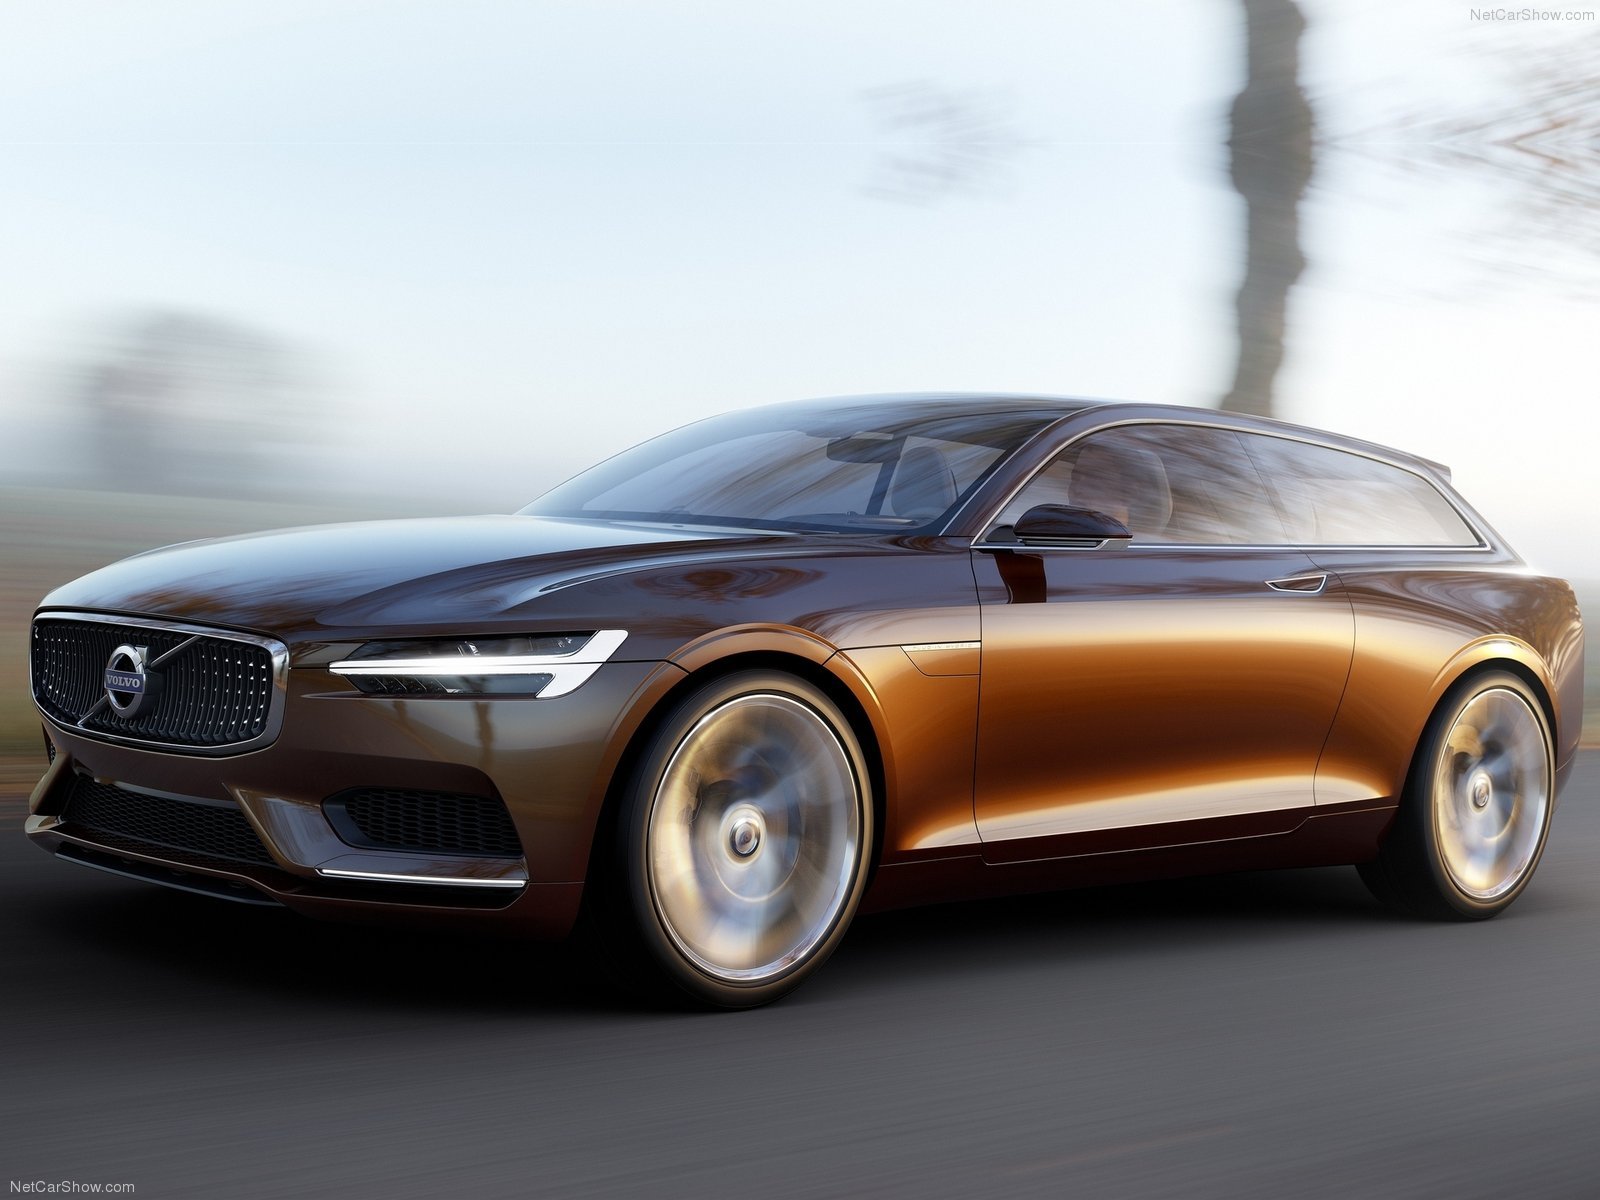 2014, Brown, Cars, Concept, Estate, Motors, Road, Speed, Volvo, Wagon Wallpaper